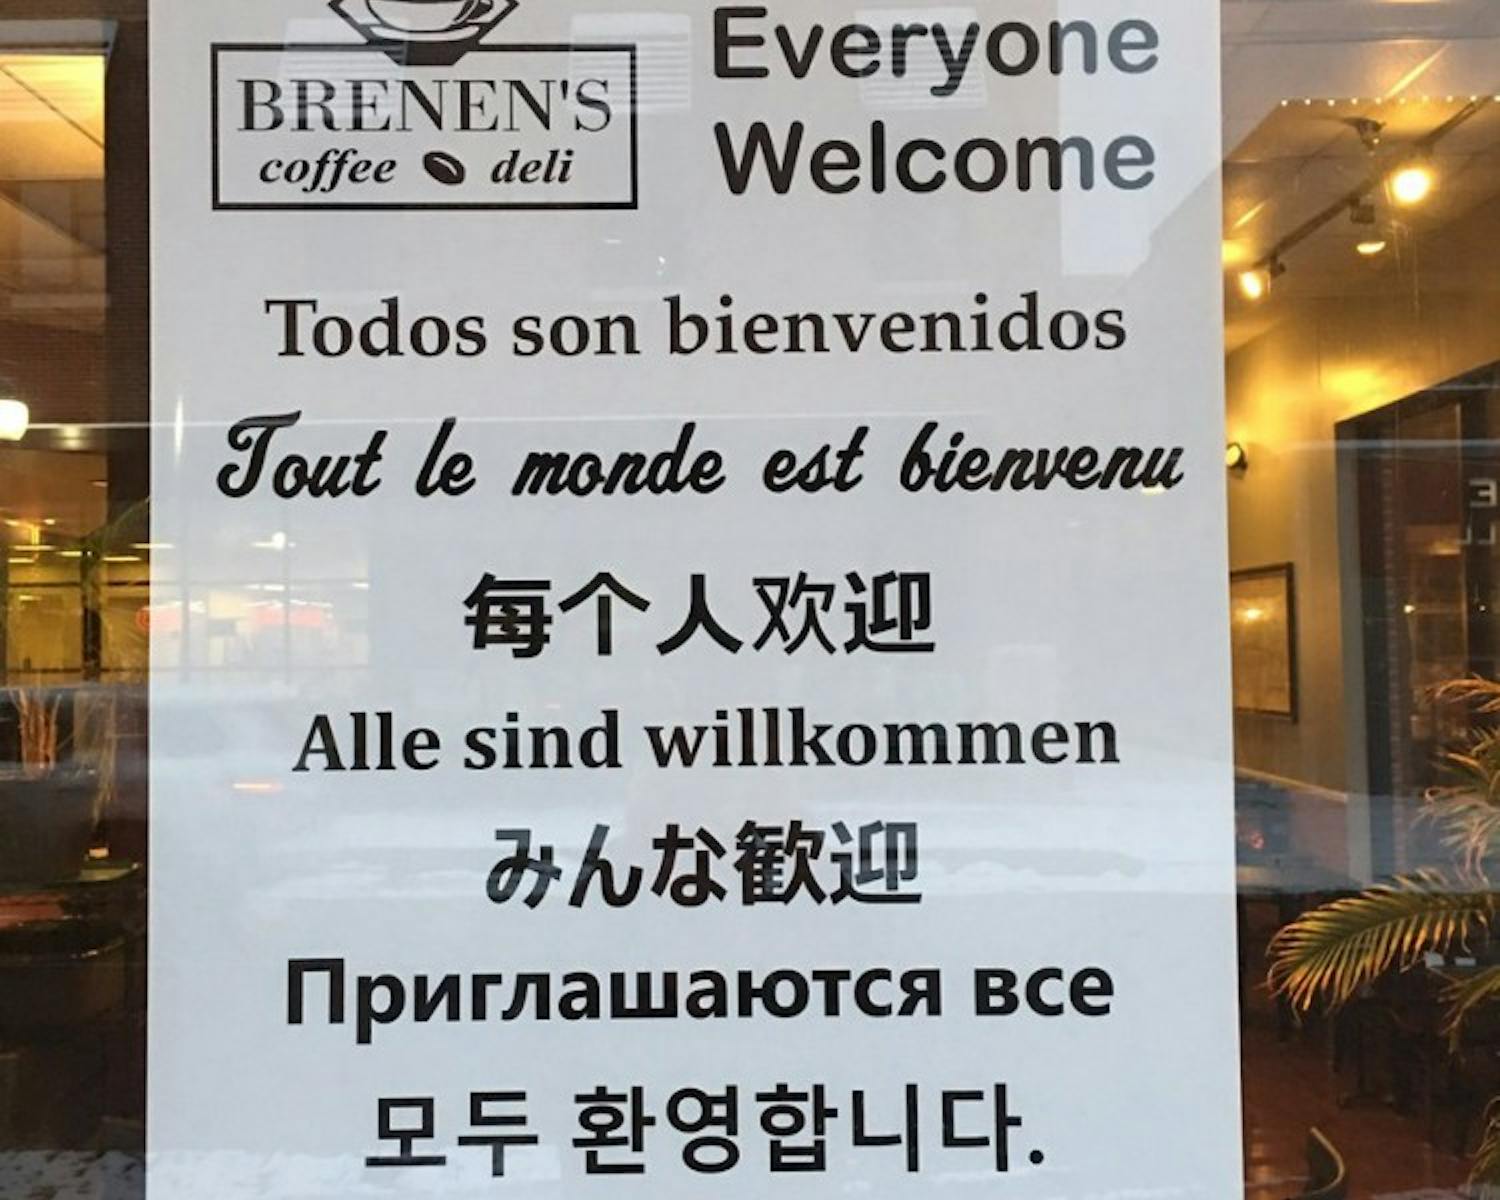 Brenen's sign